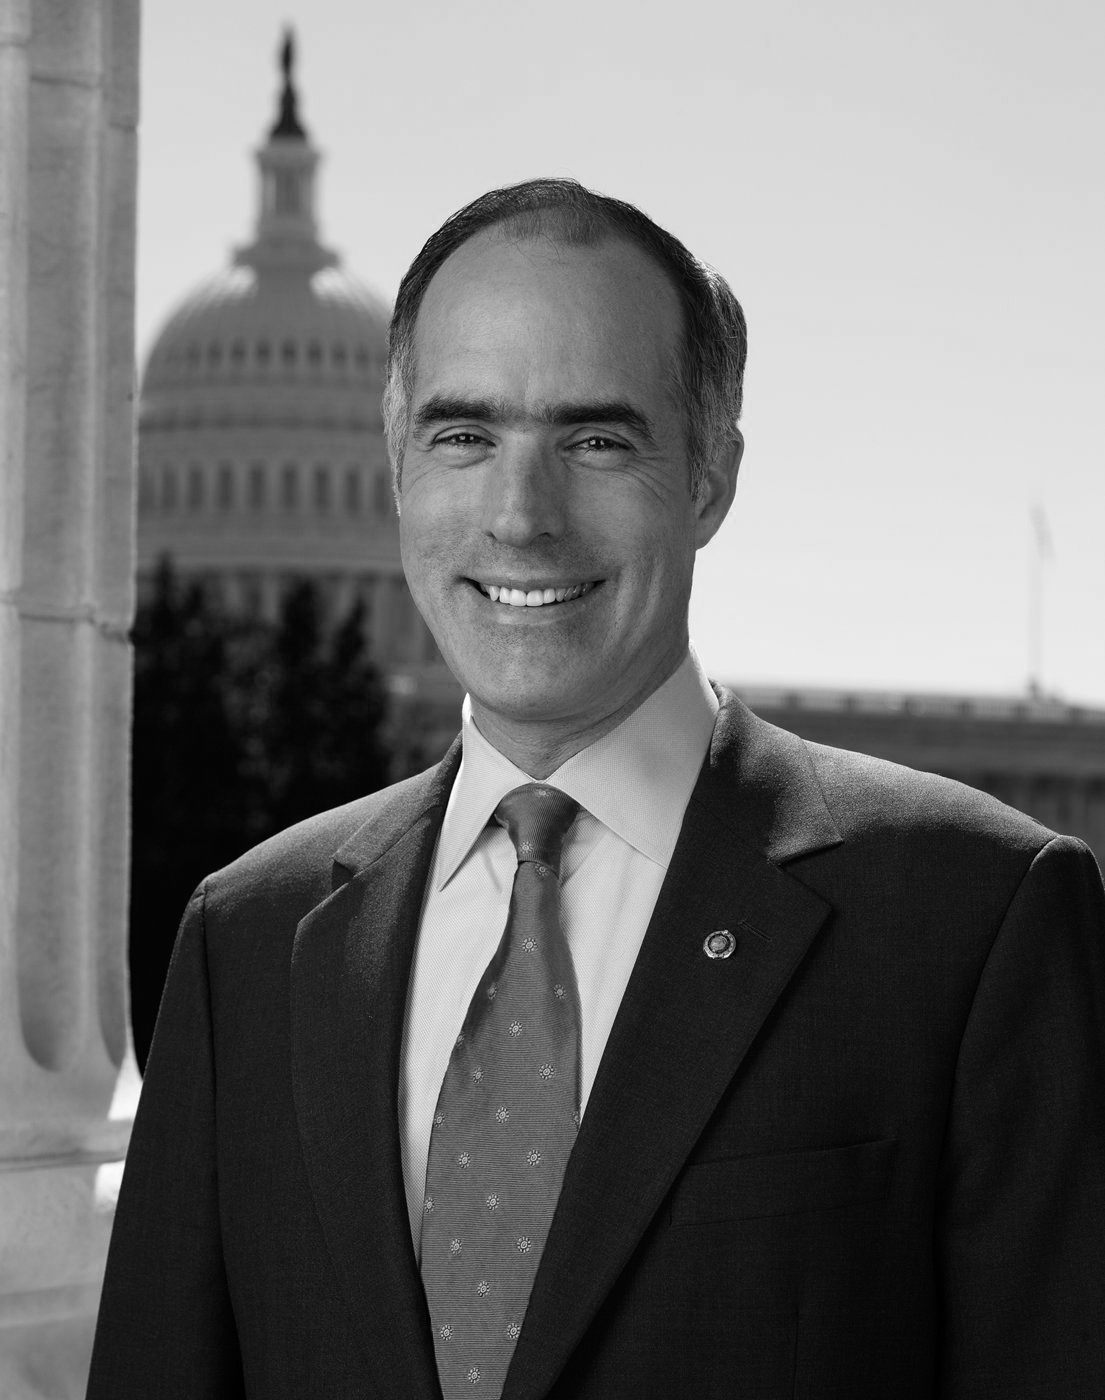 Senator Robert P. Casey Portrait - Close Up - Black and White